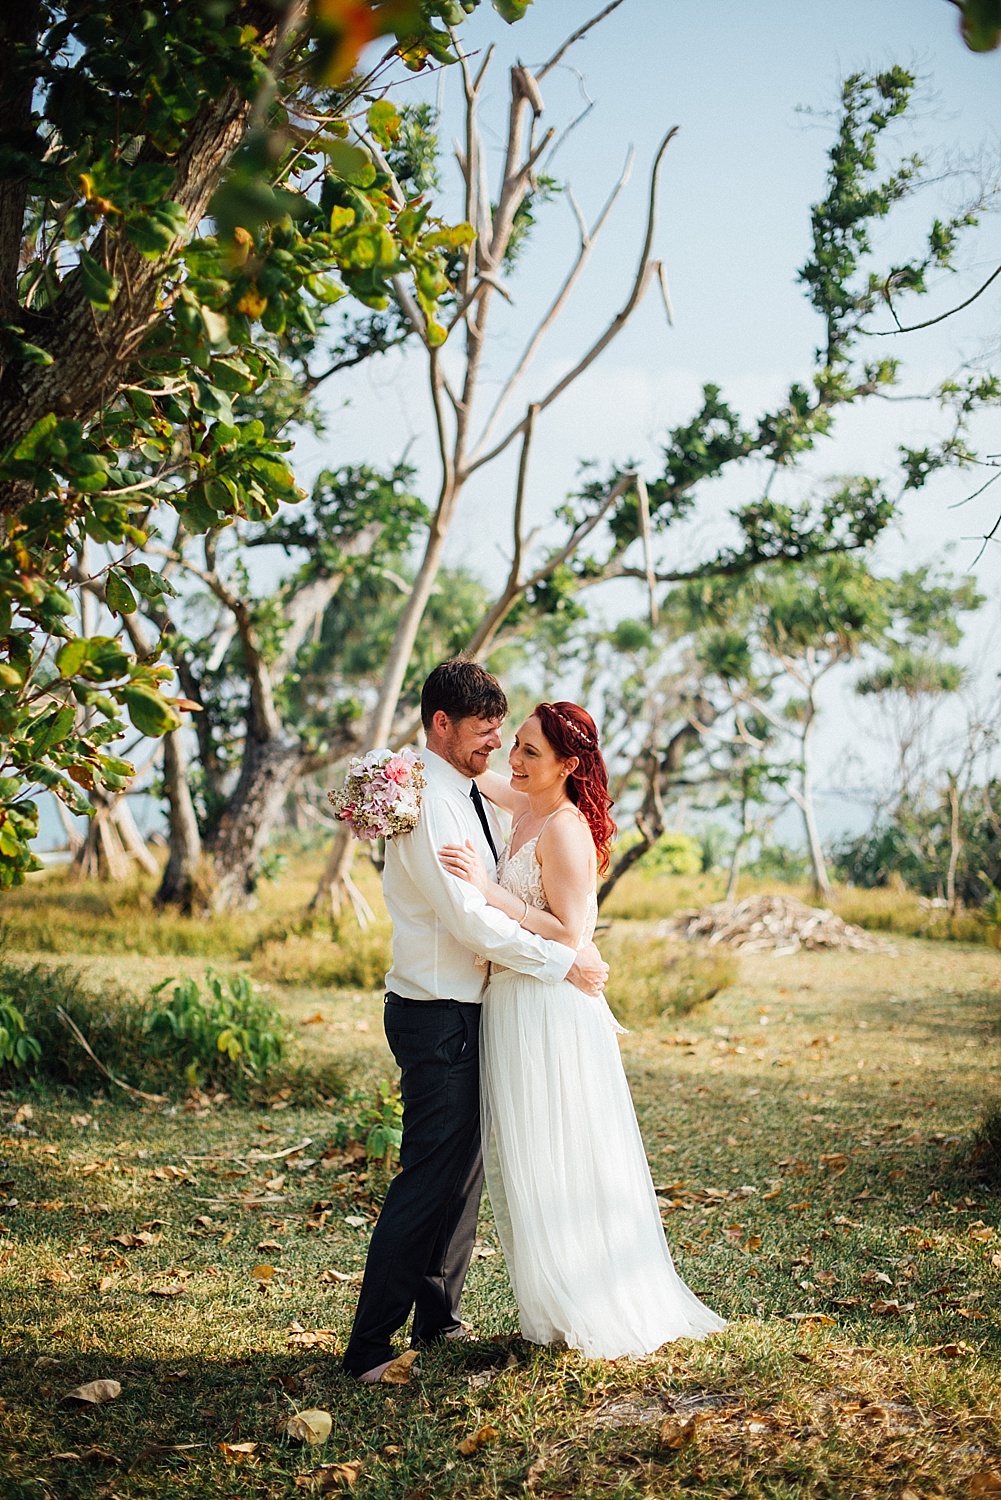 Kym&Lee-Wedding-Photography-Vanuatu-Eratap_0041.jpg